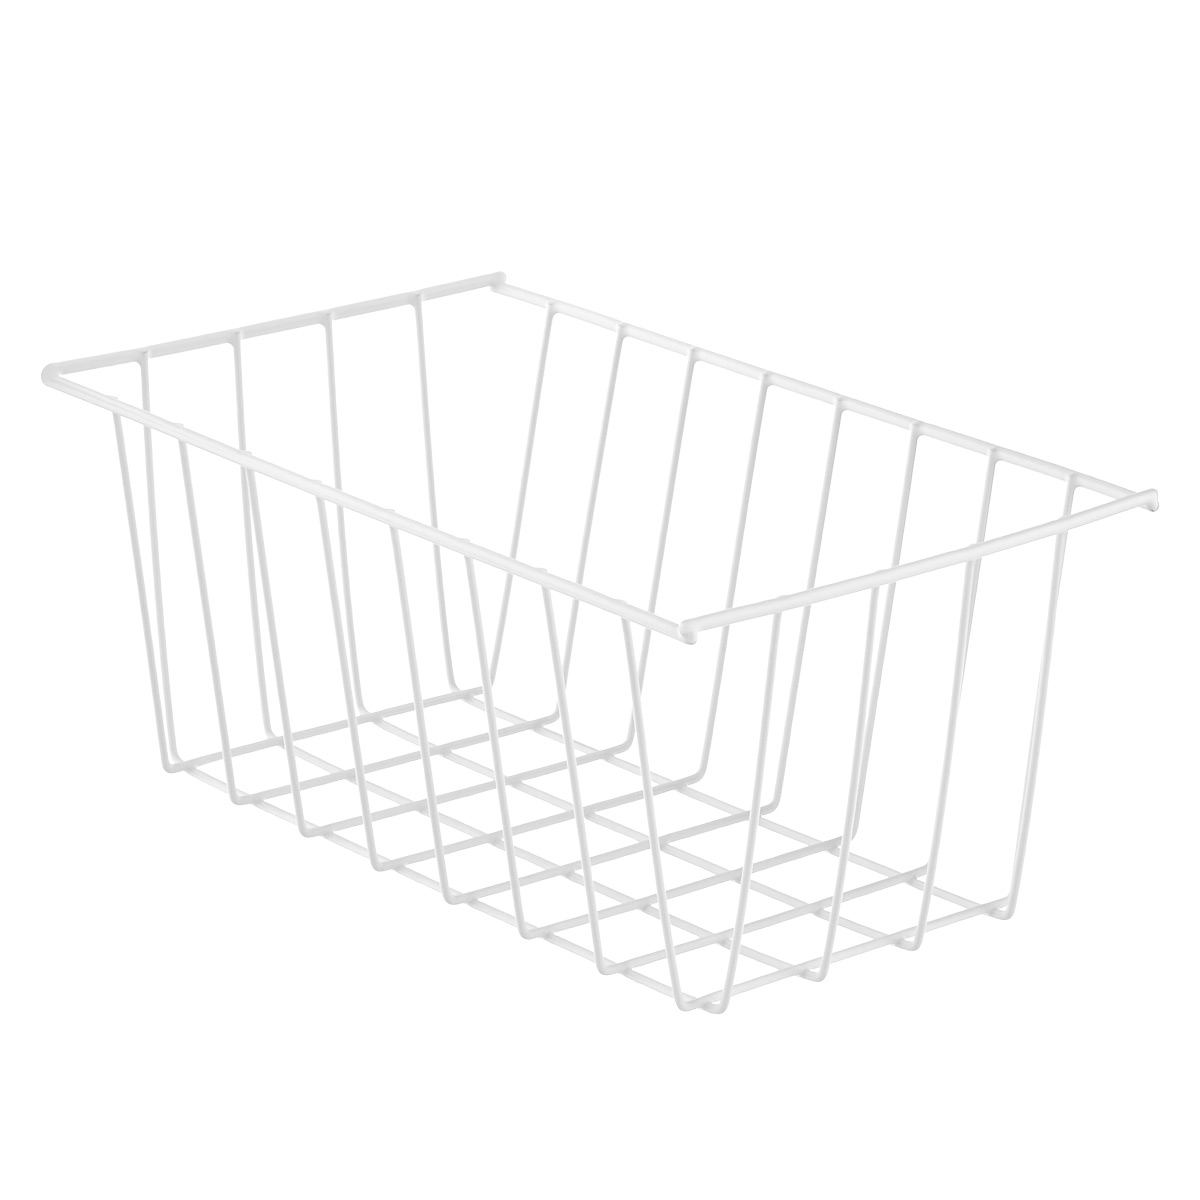 Shallow Freezer Basket - White - 15 x 8-3/4 x 5-1/2 H - Each